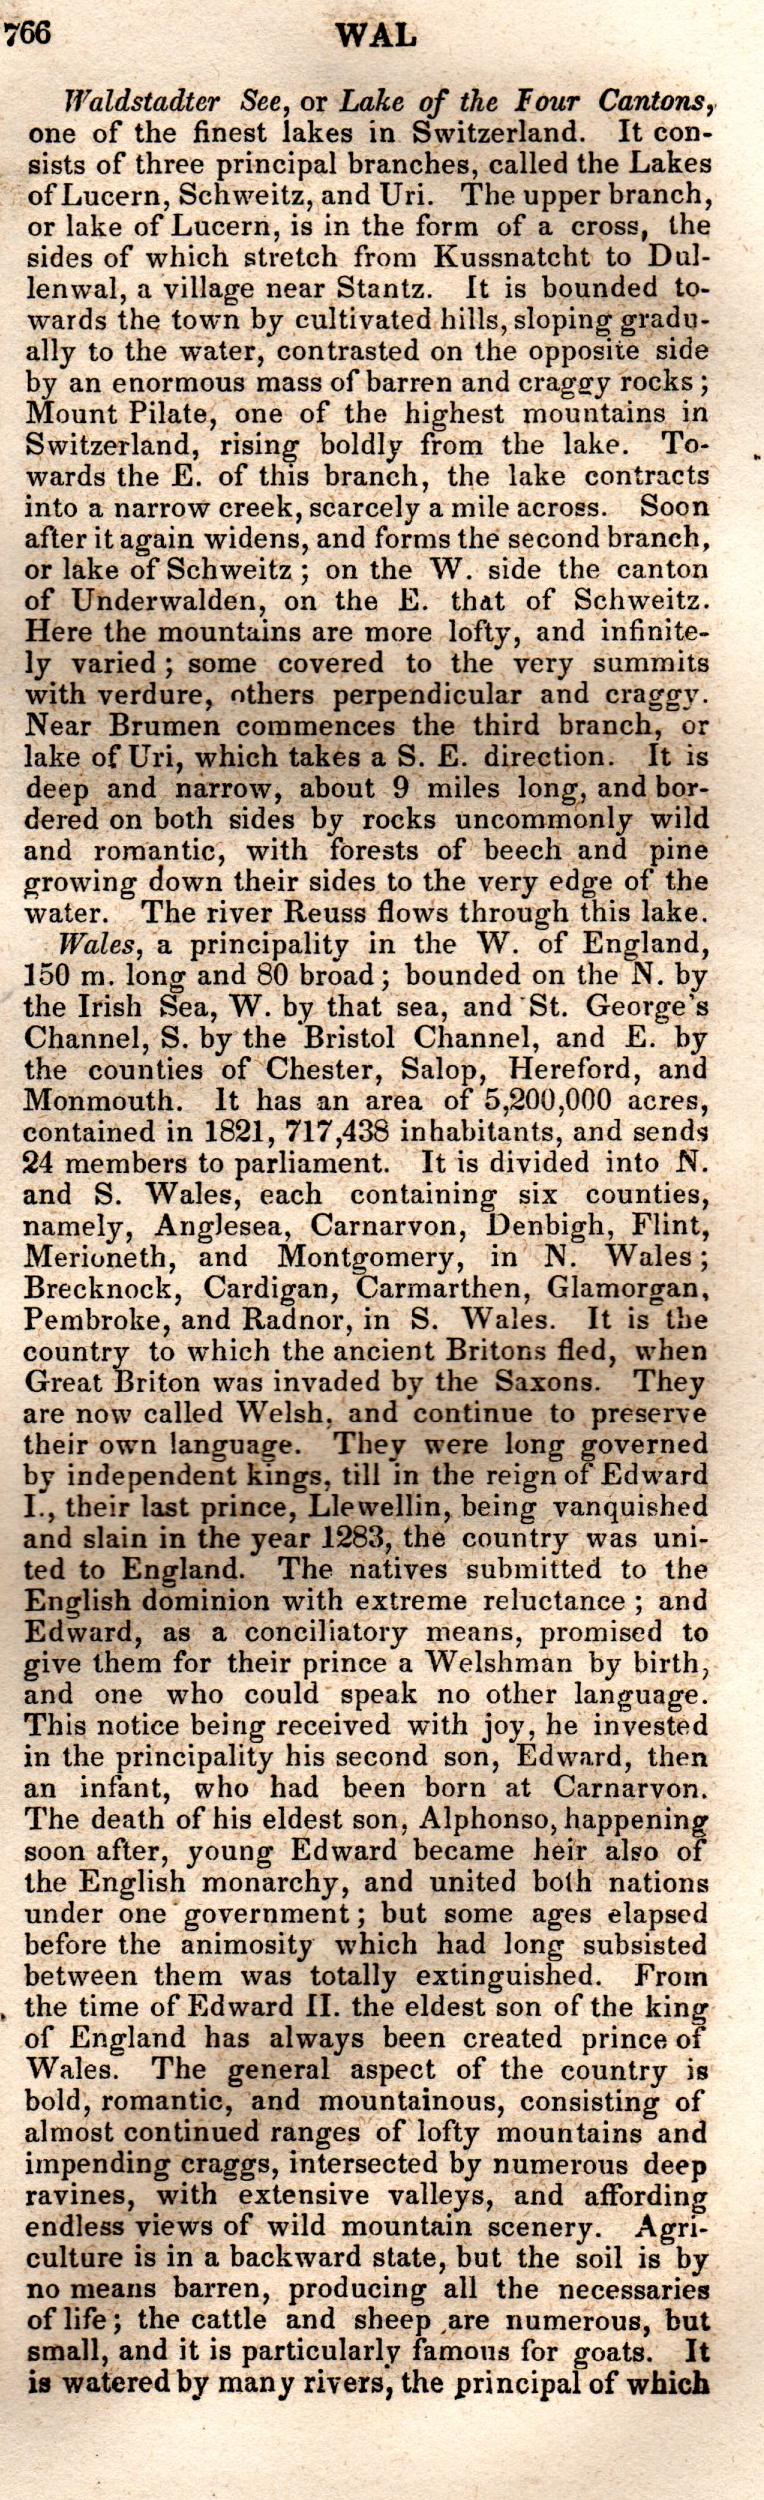 Brookes’ Universal Gazetteer (1850), Page 766 Right Column